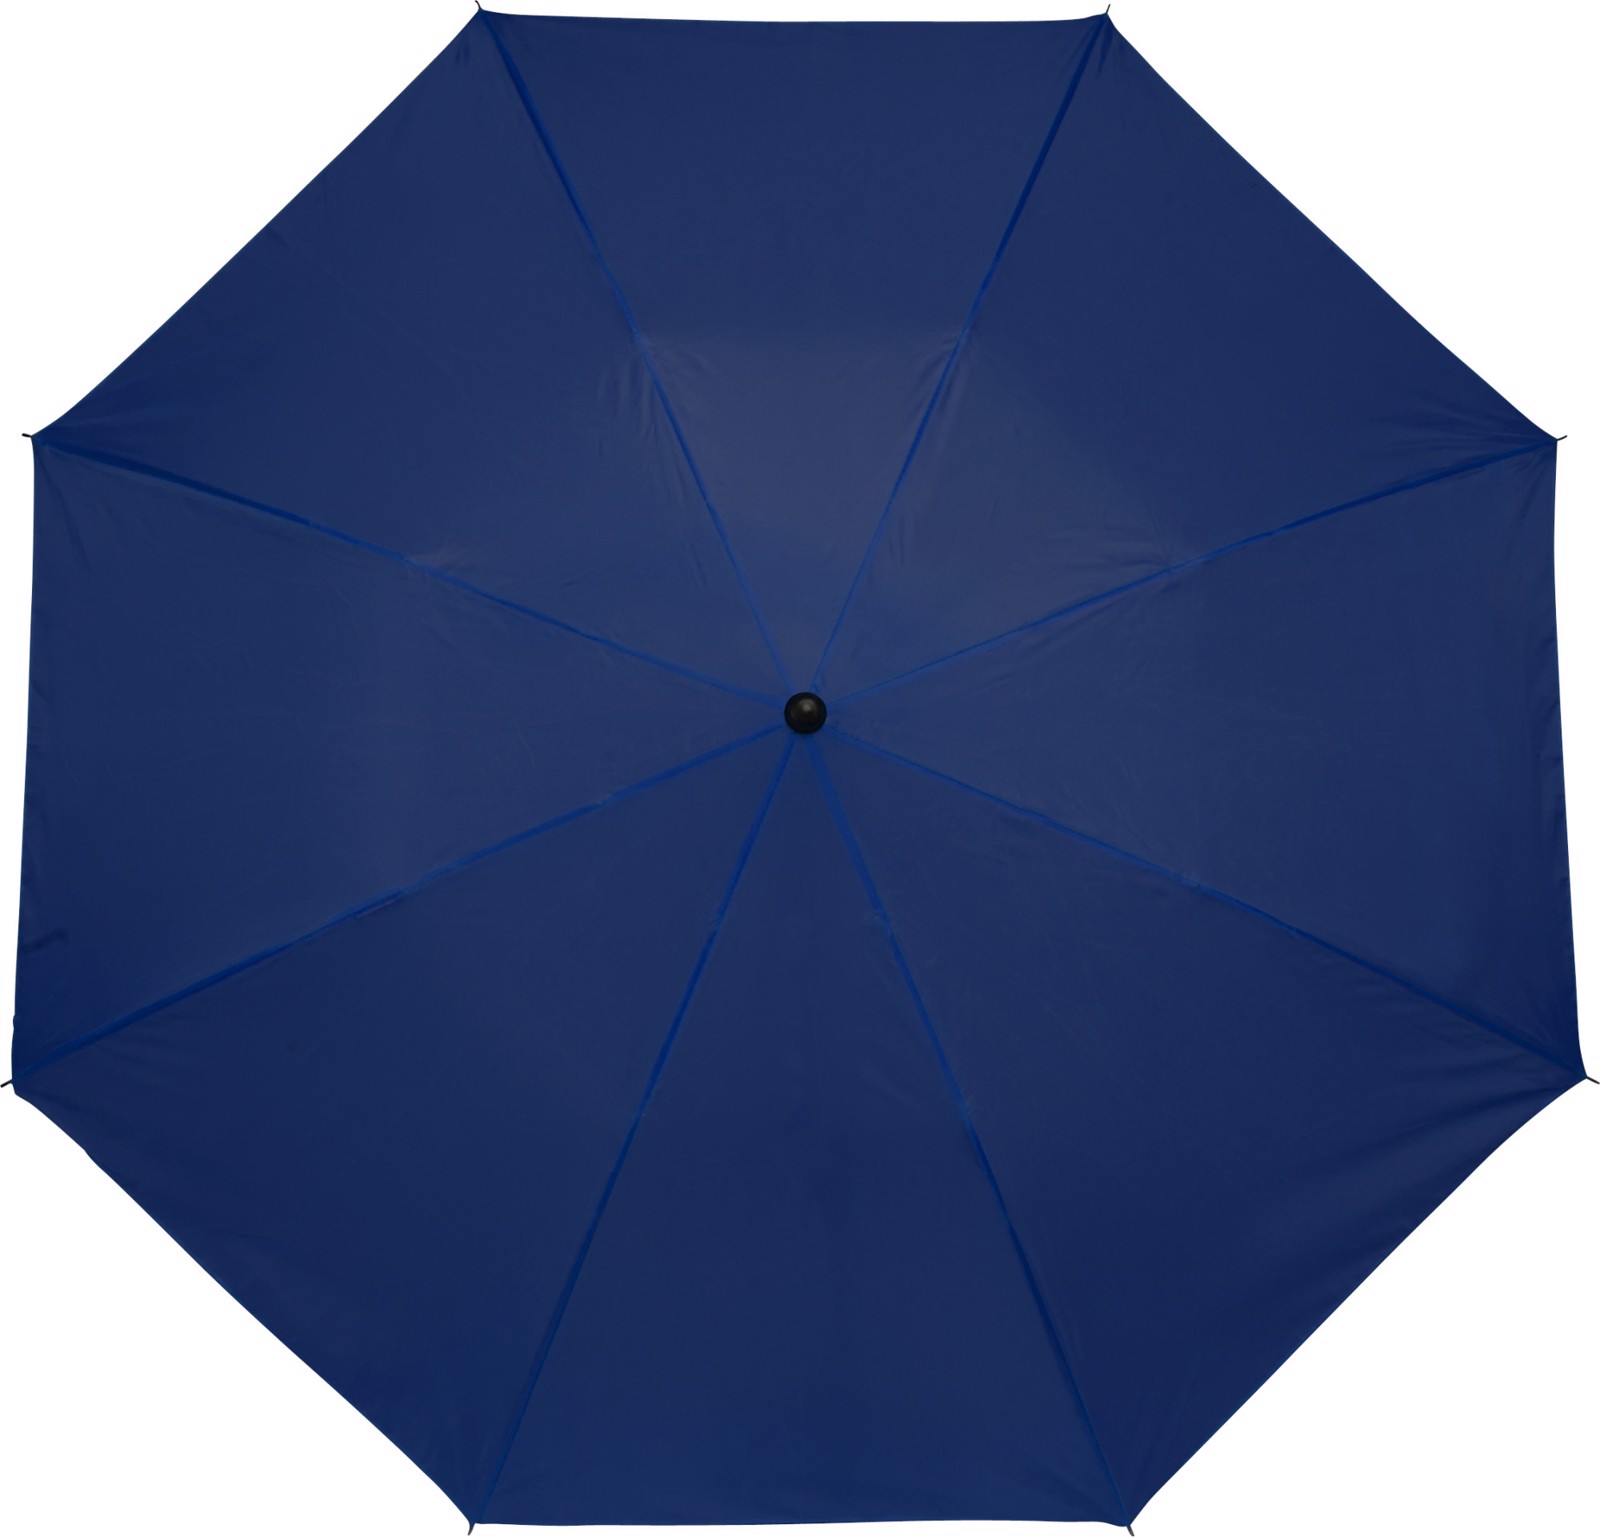 Polyester (190T) umbrella - Blue